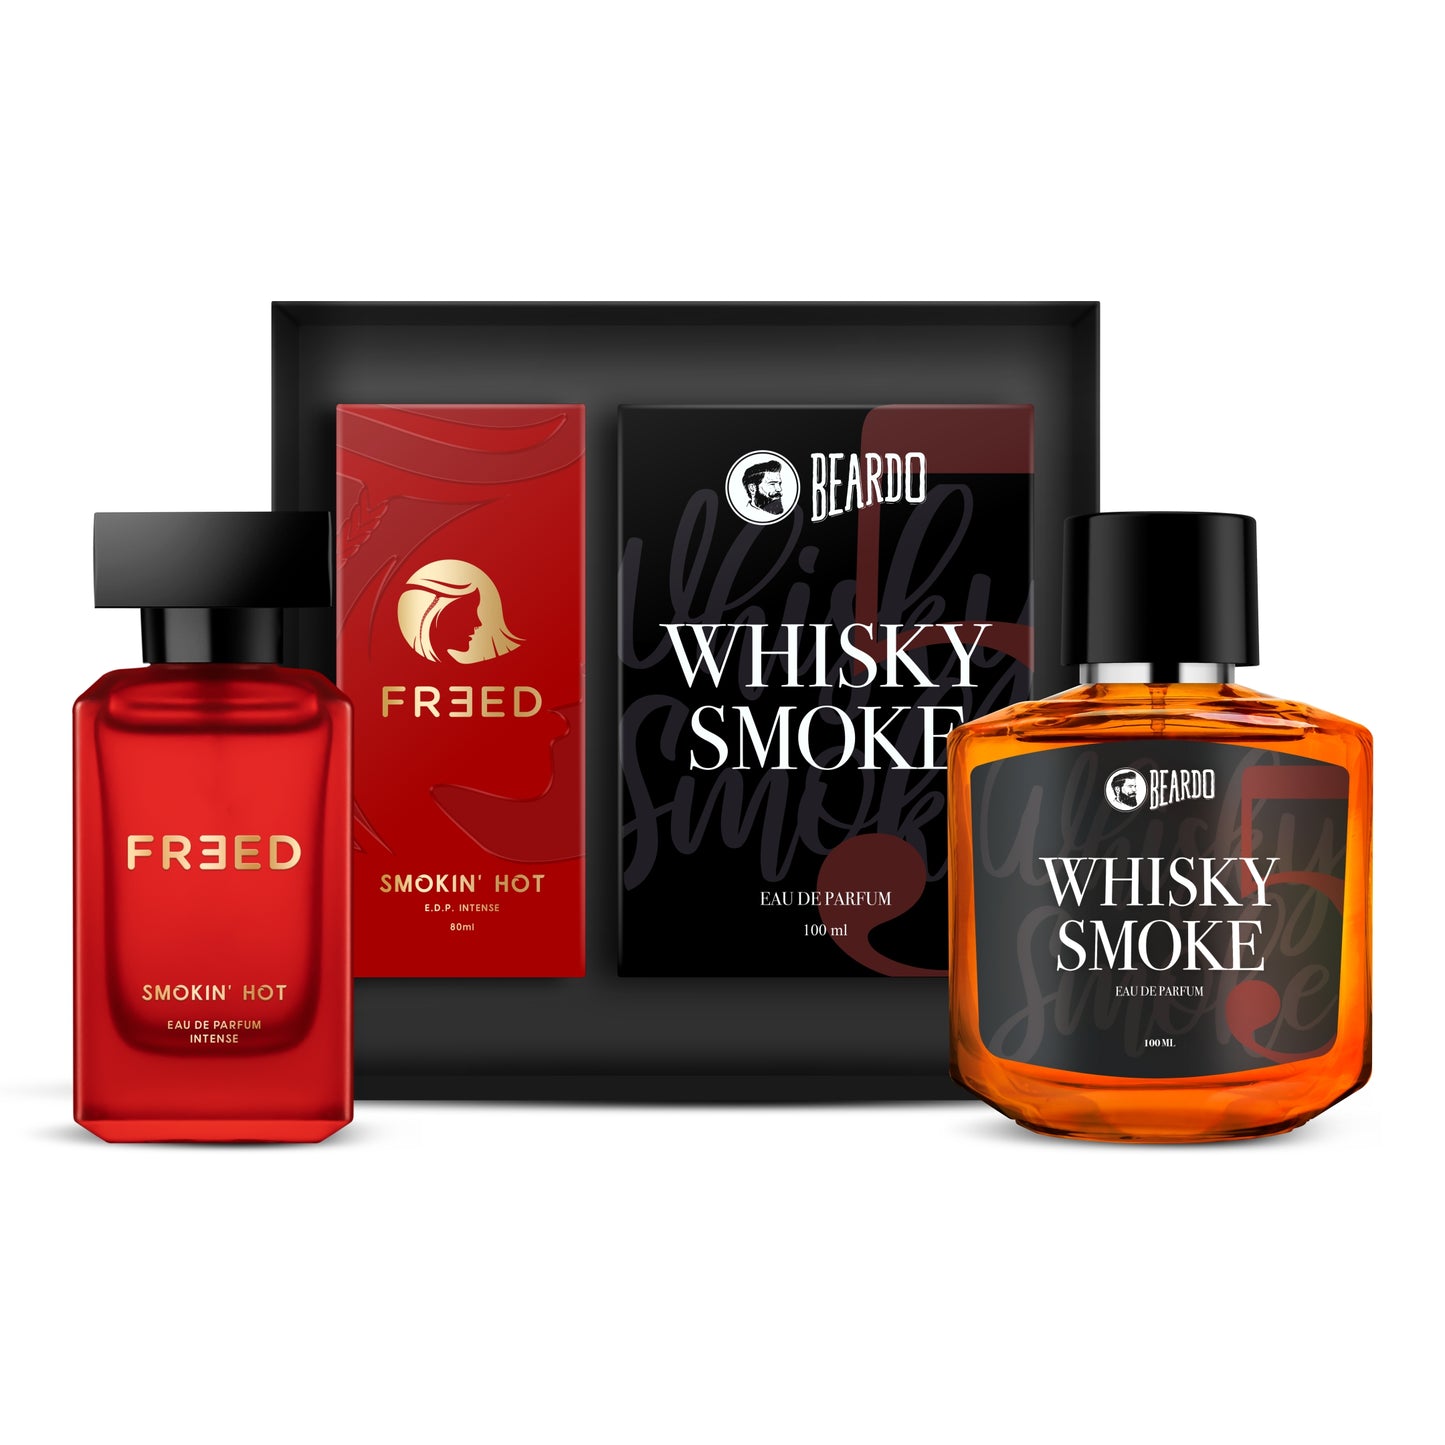 Beardo & Freed Ultimate Perfume Combo (For Him & Her)